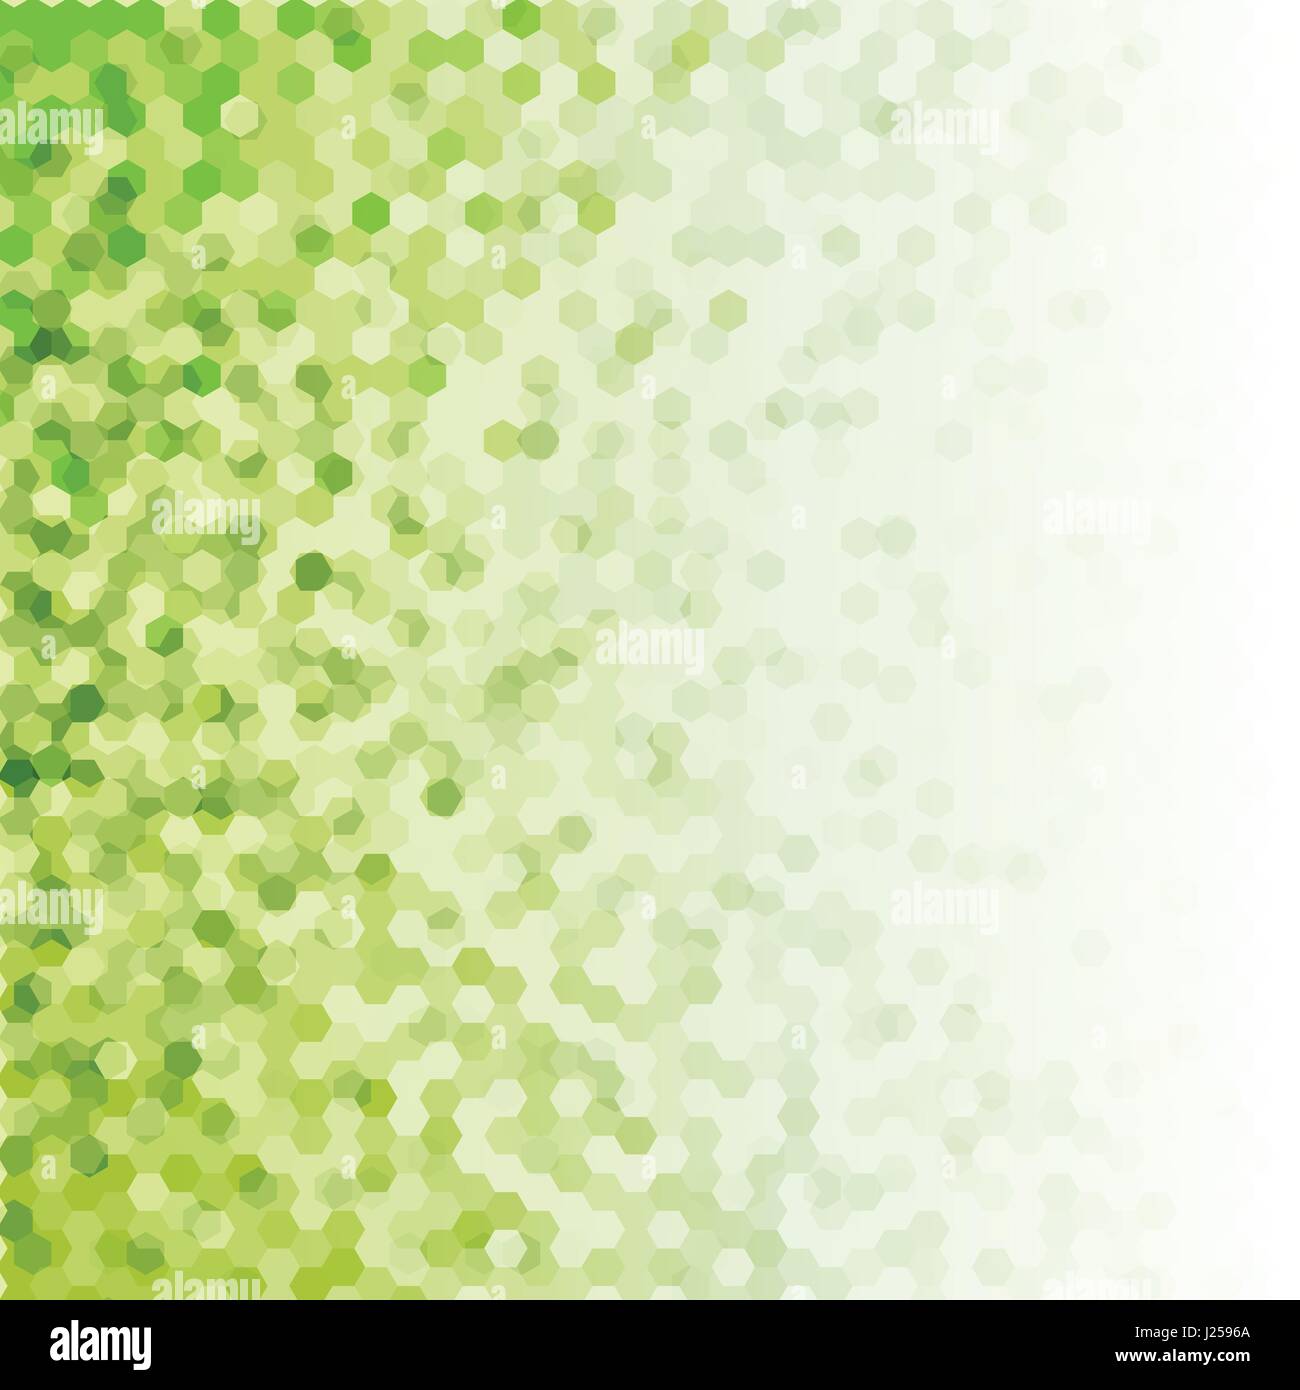 Schatten der grünen Sechseck-Muster-Design-abstrakten Hintergrund-Konzept Stock Vektor